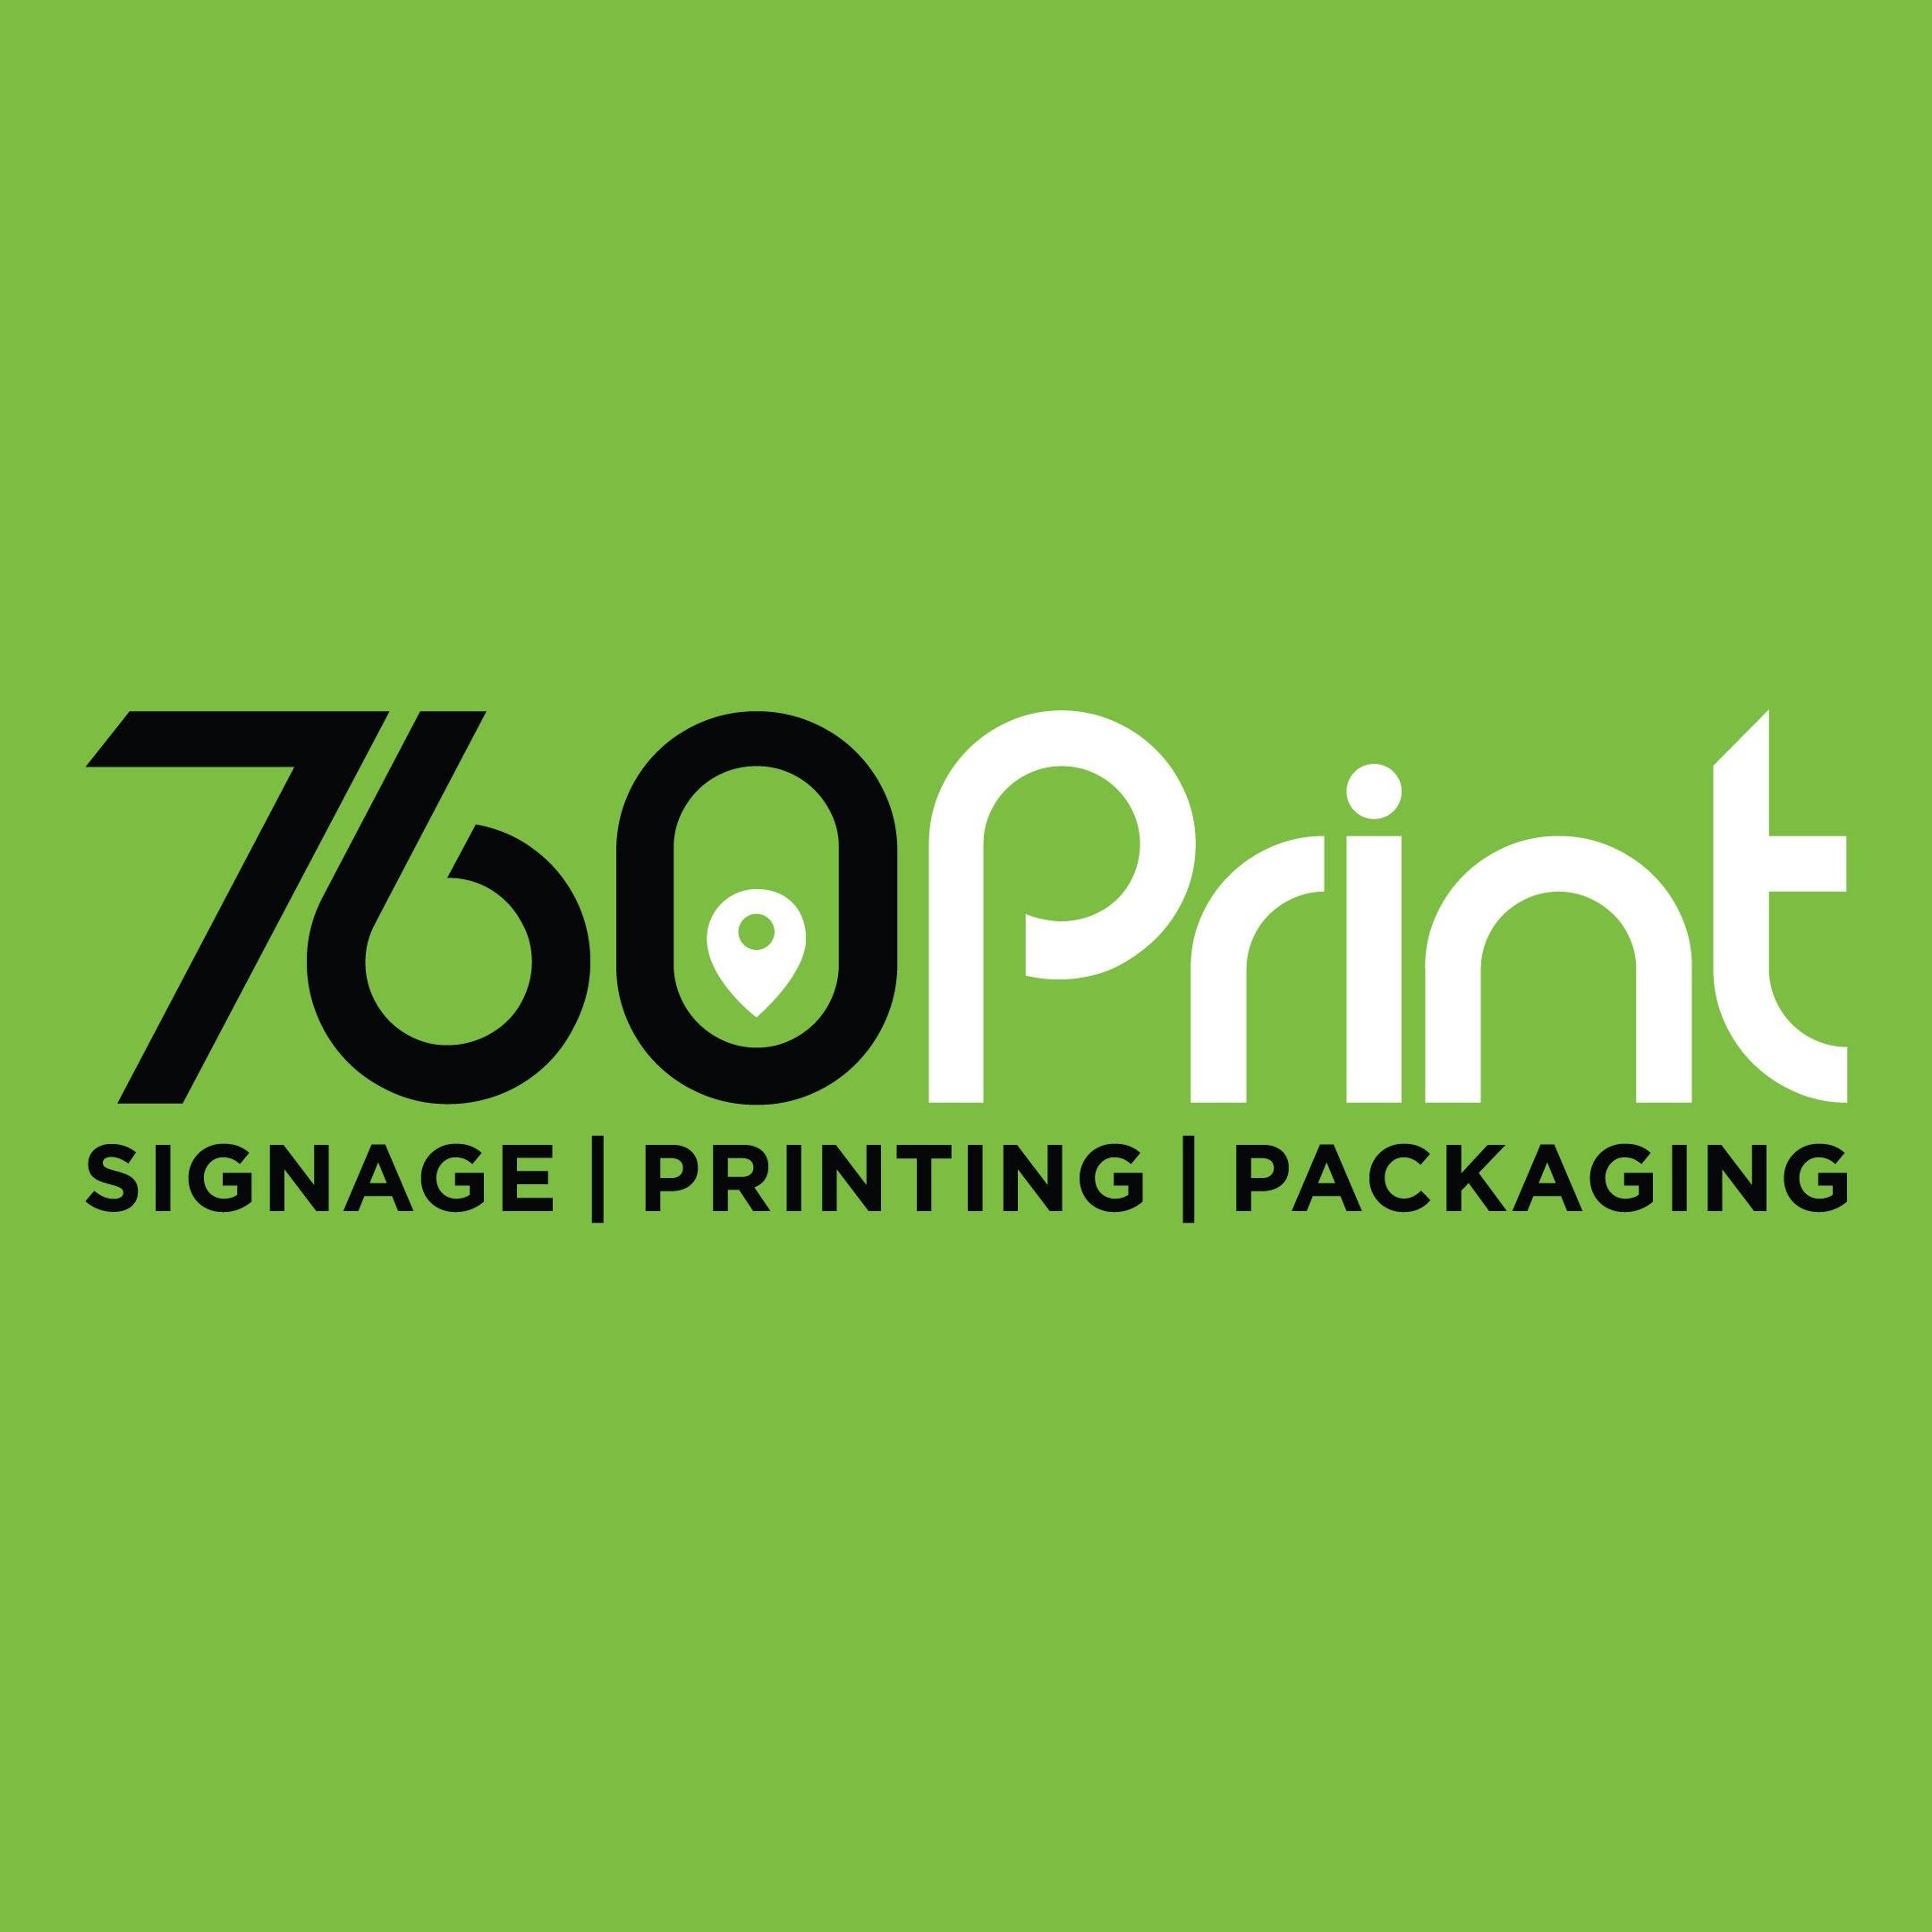 760 Print | Signage, Printing, Packaging Vista (760)758-1140